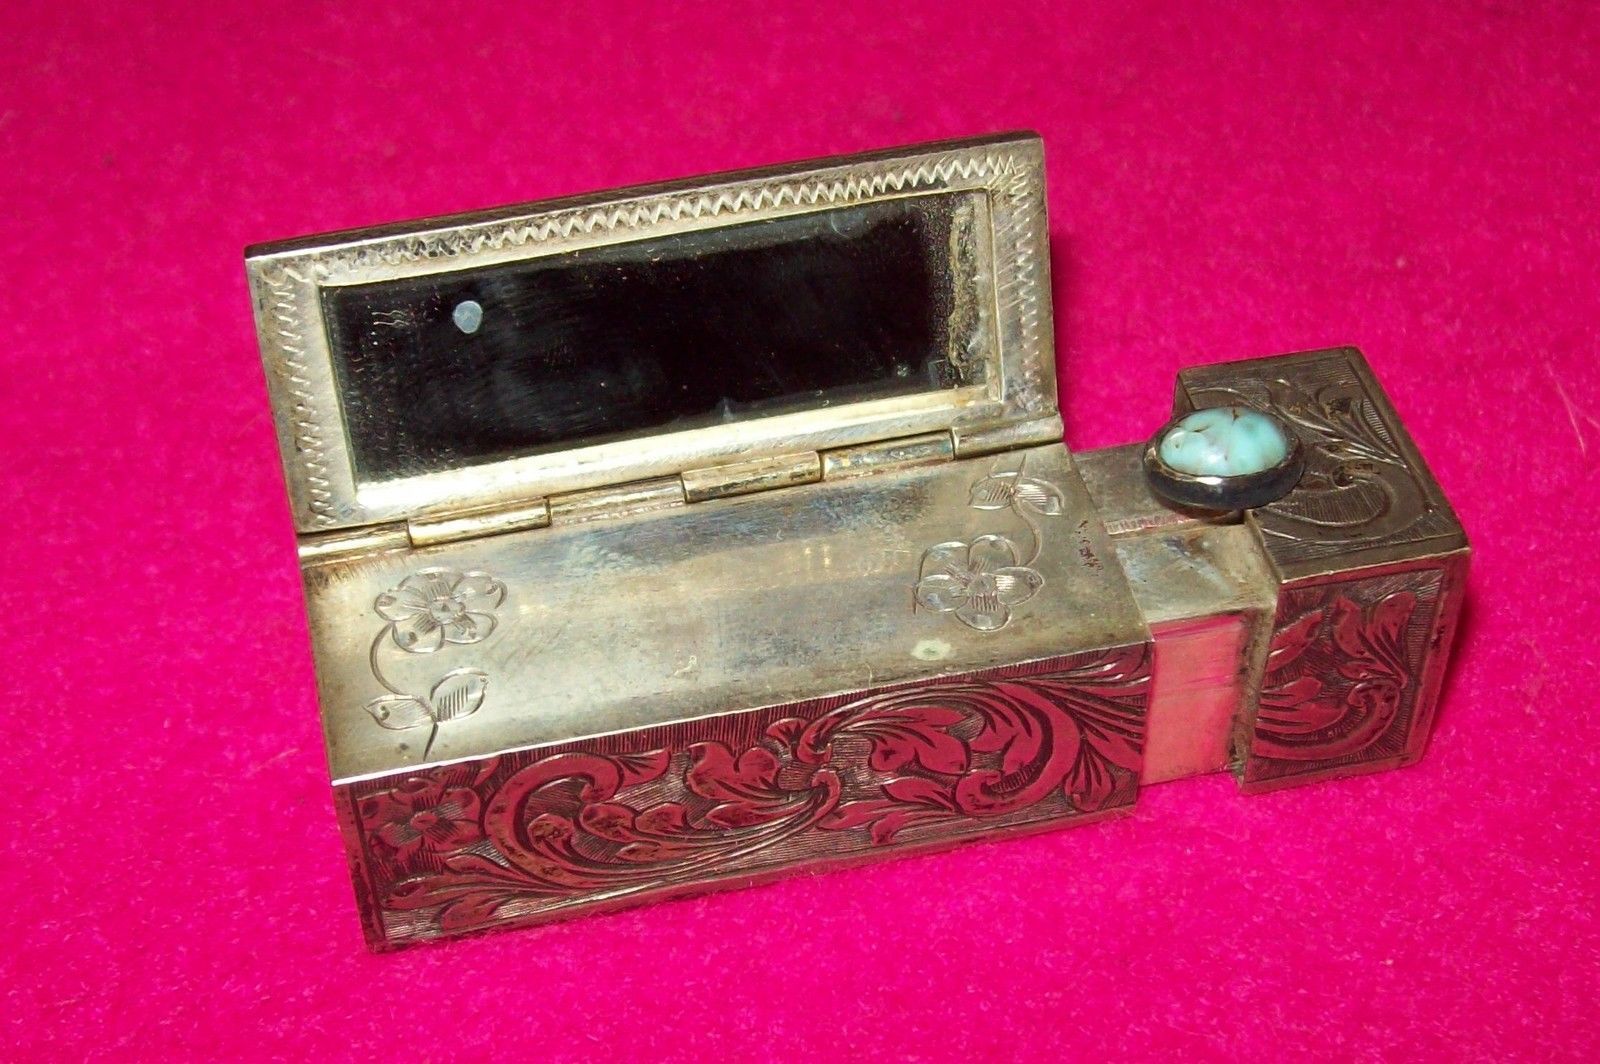 800 Silver Italian Lipstick & Mirror Case Vintage Lipstick Holder